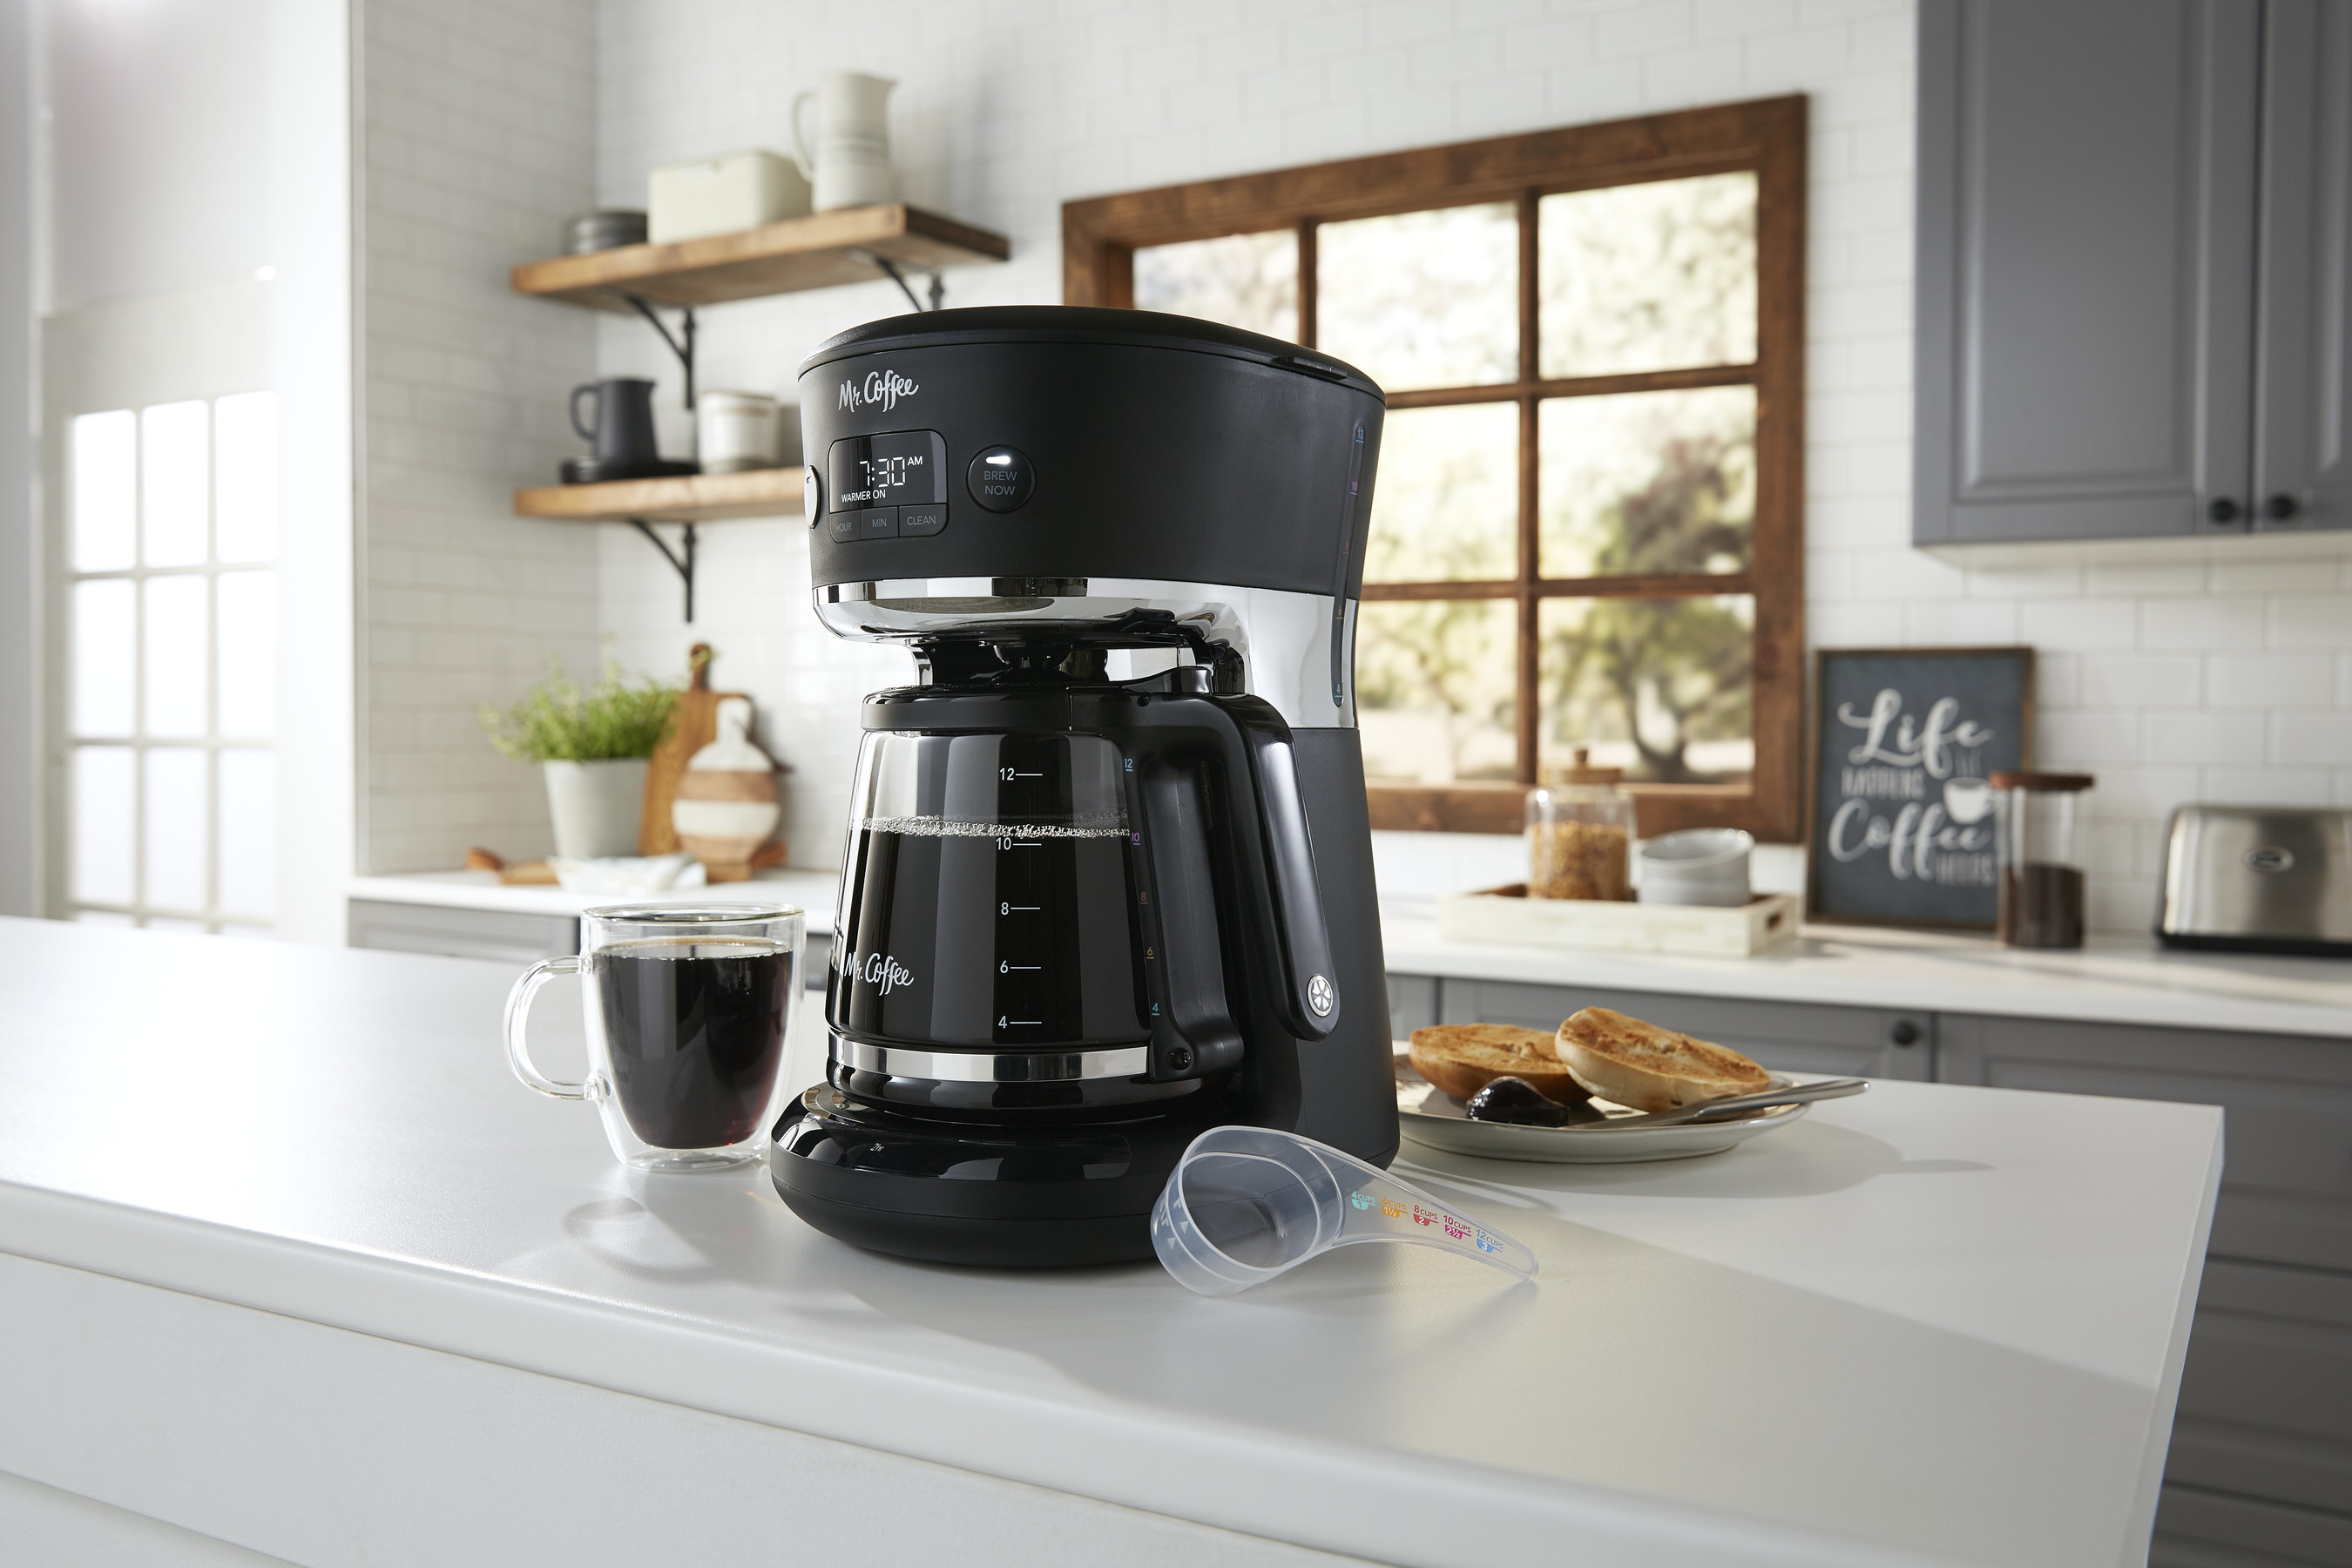 https://www.kitchenwarenews.com/wp-content/uploads/2019/04/Mr_Coffee_Easy_Measure-1.jpg